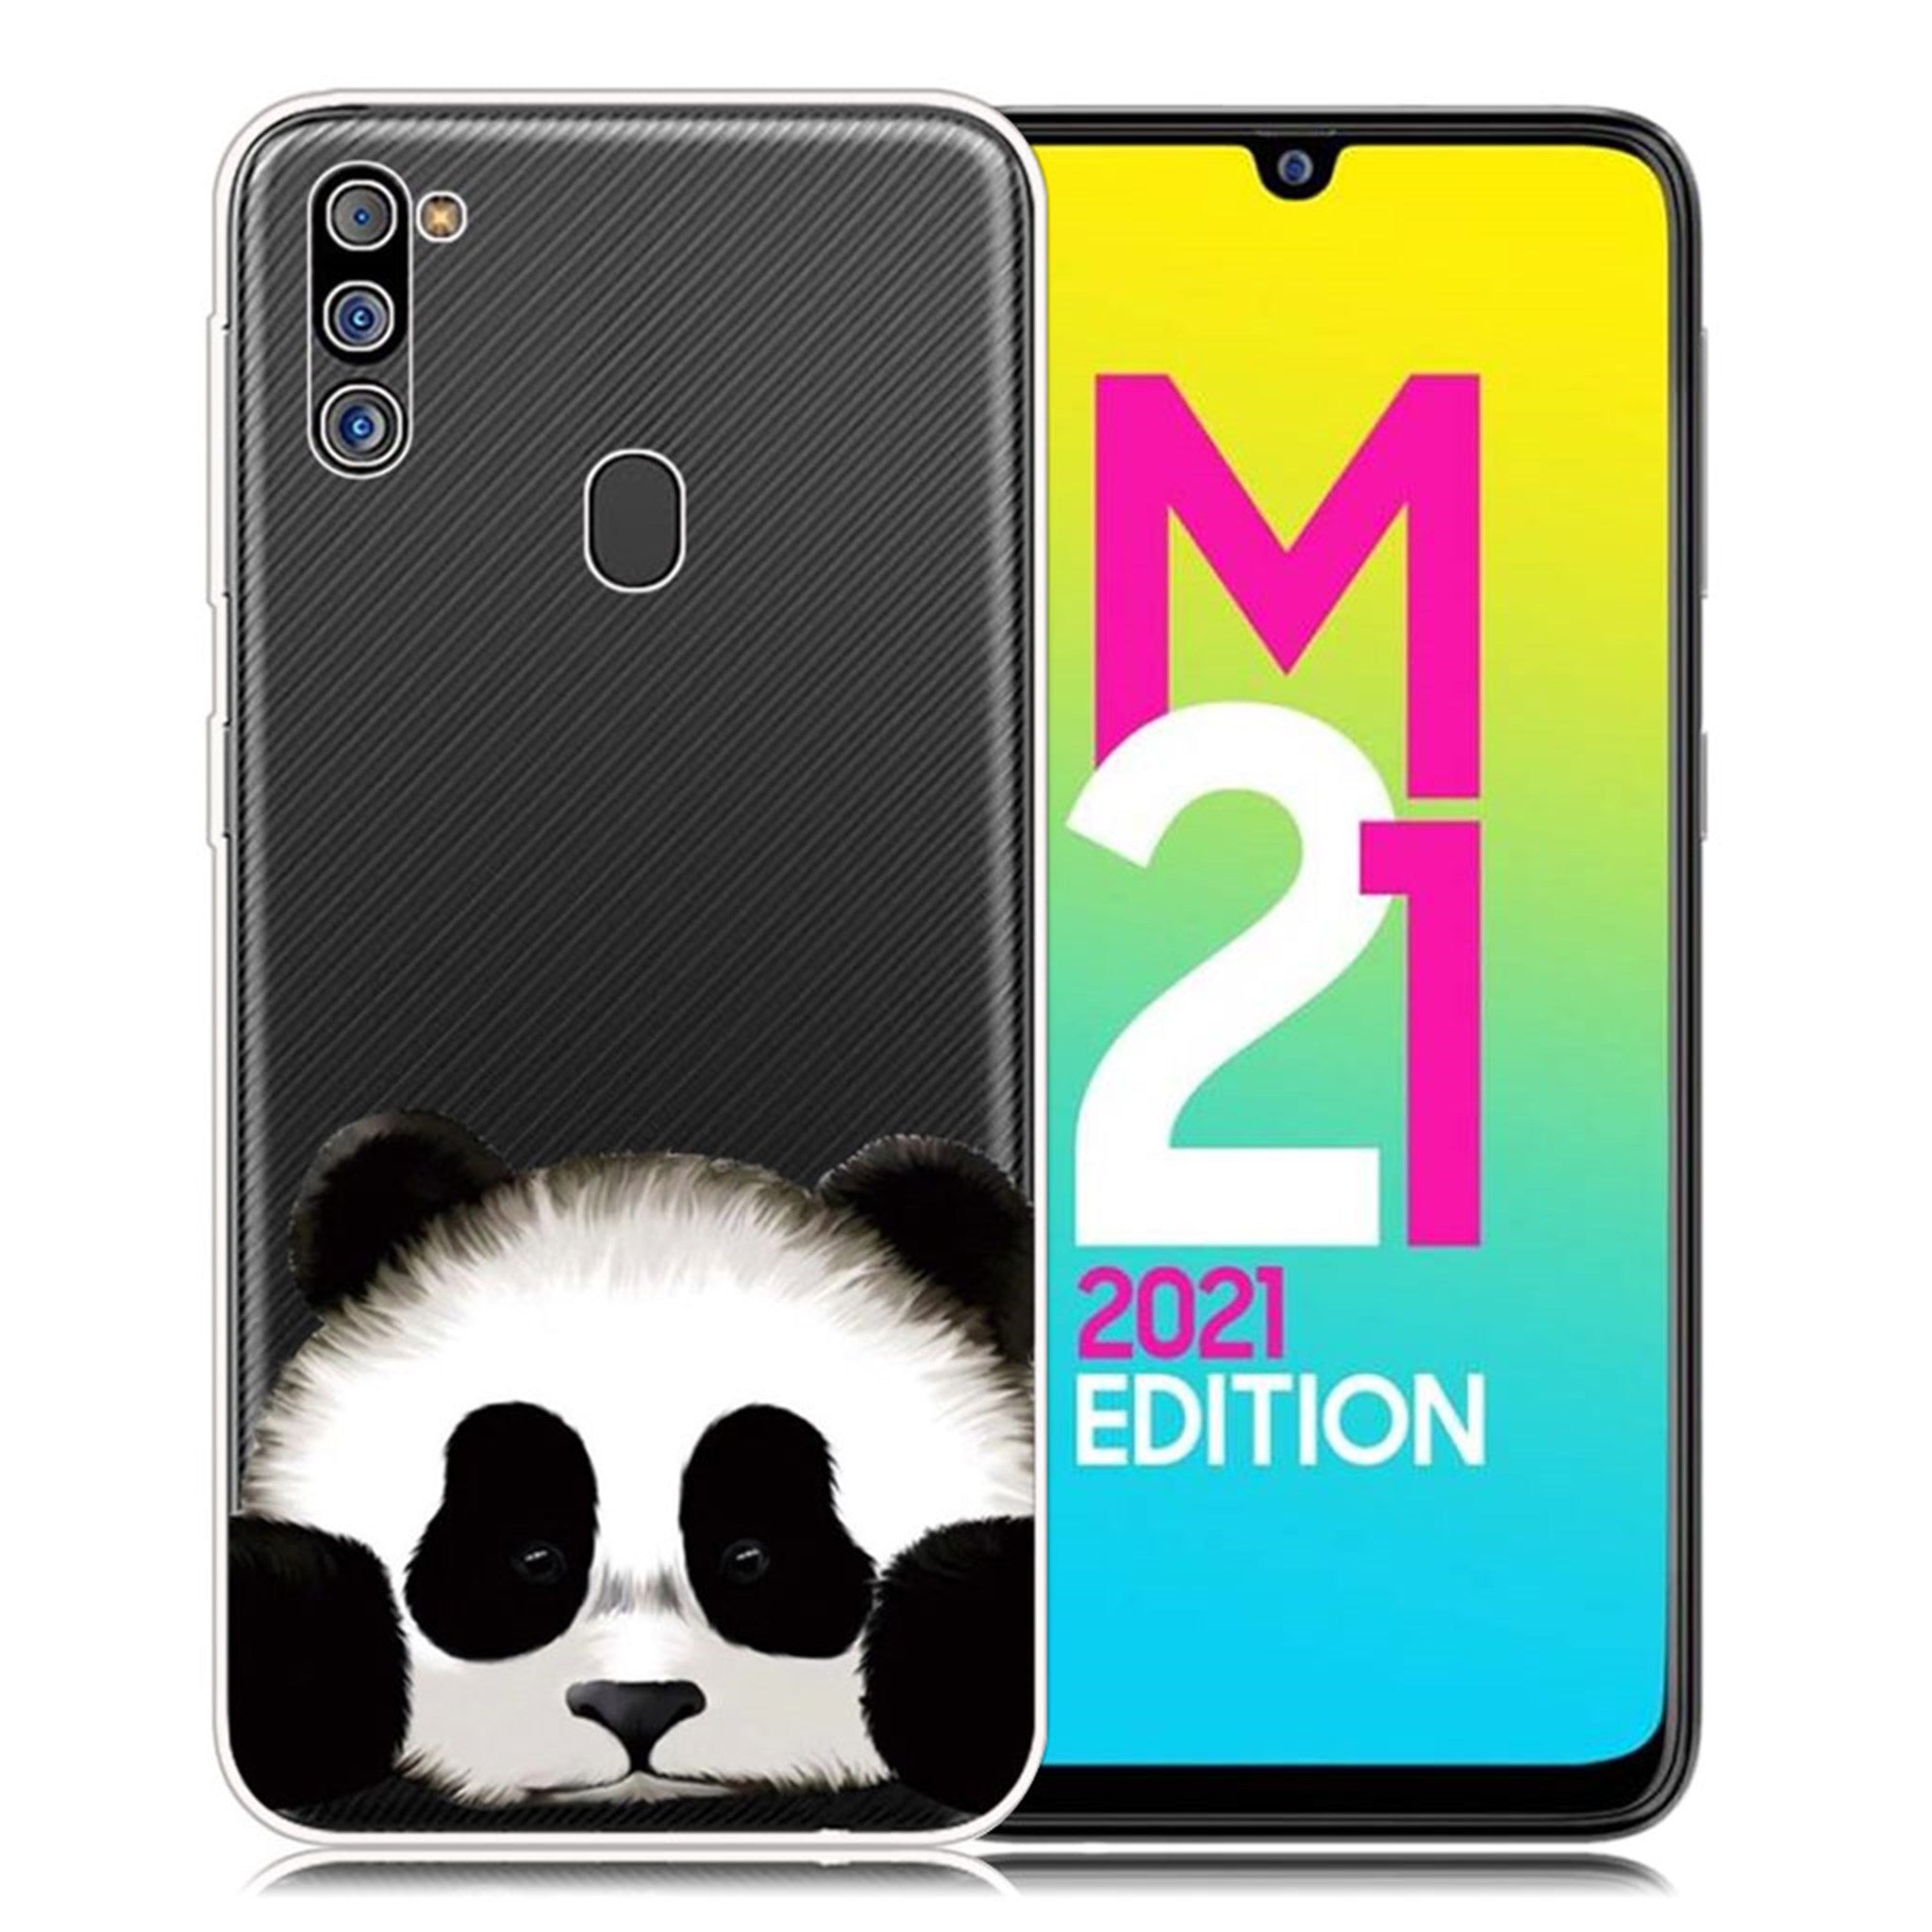 Deco Samsung Galaxy M21 2021 case - Cute Panda